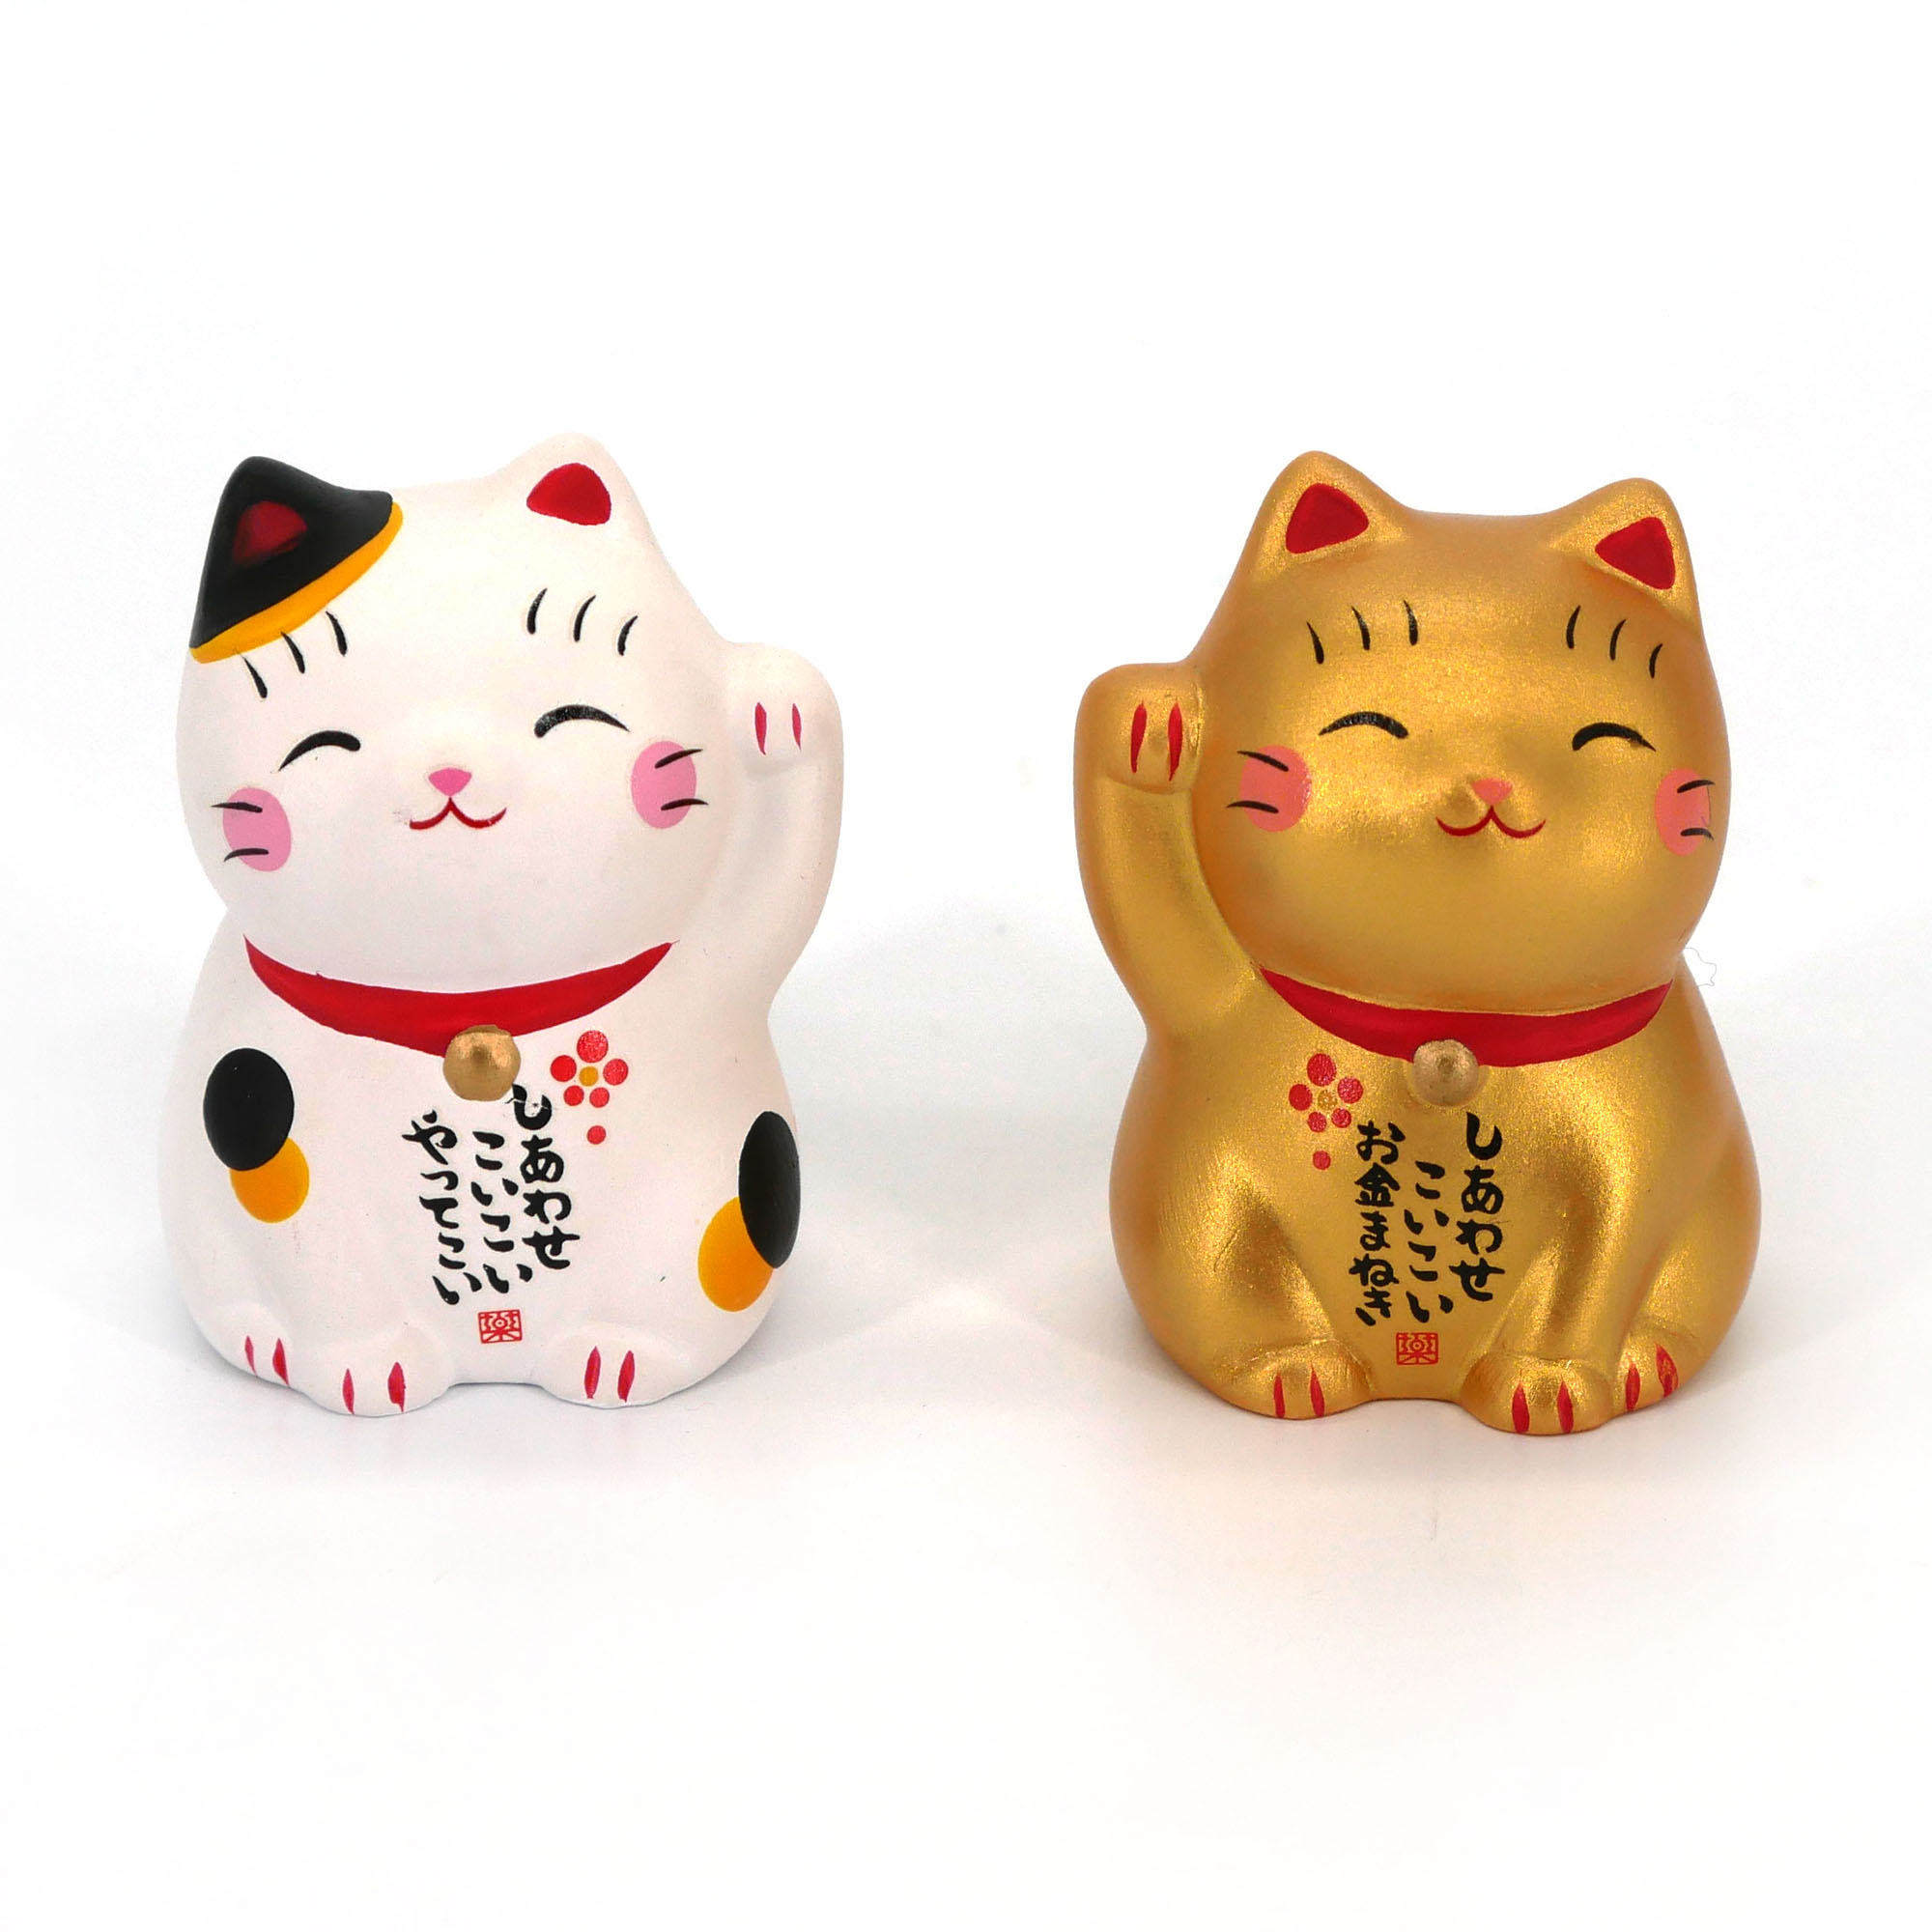 Manekineko japonés del gato de la suerte de cerámica, NEKO